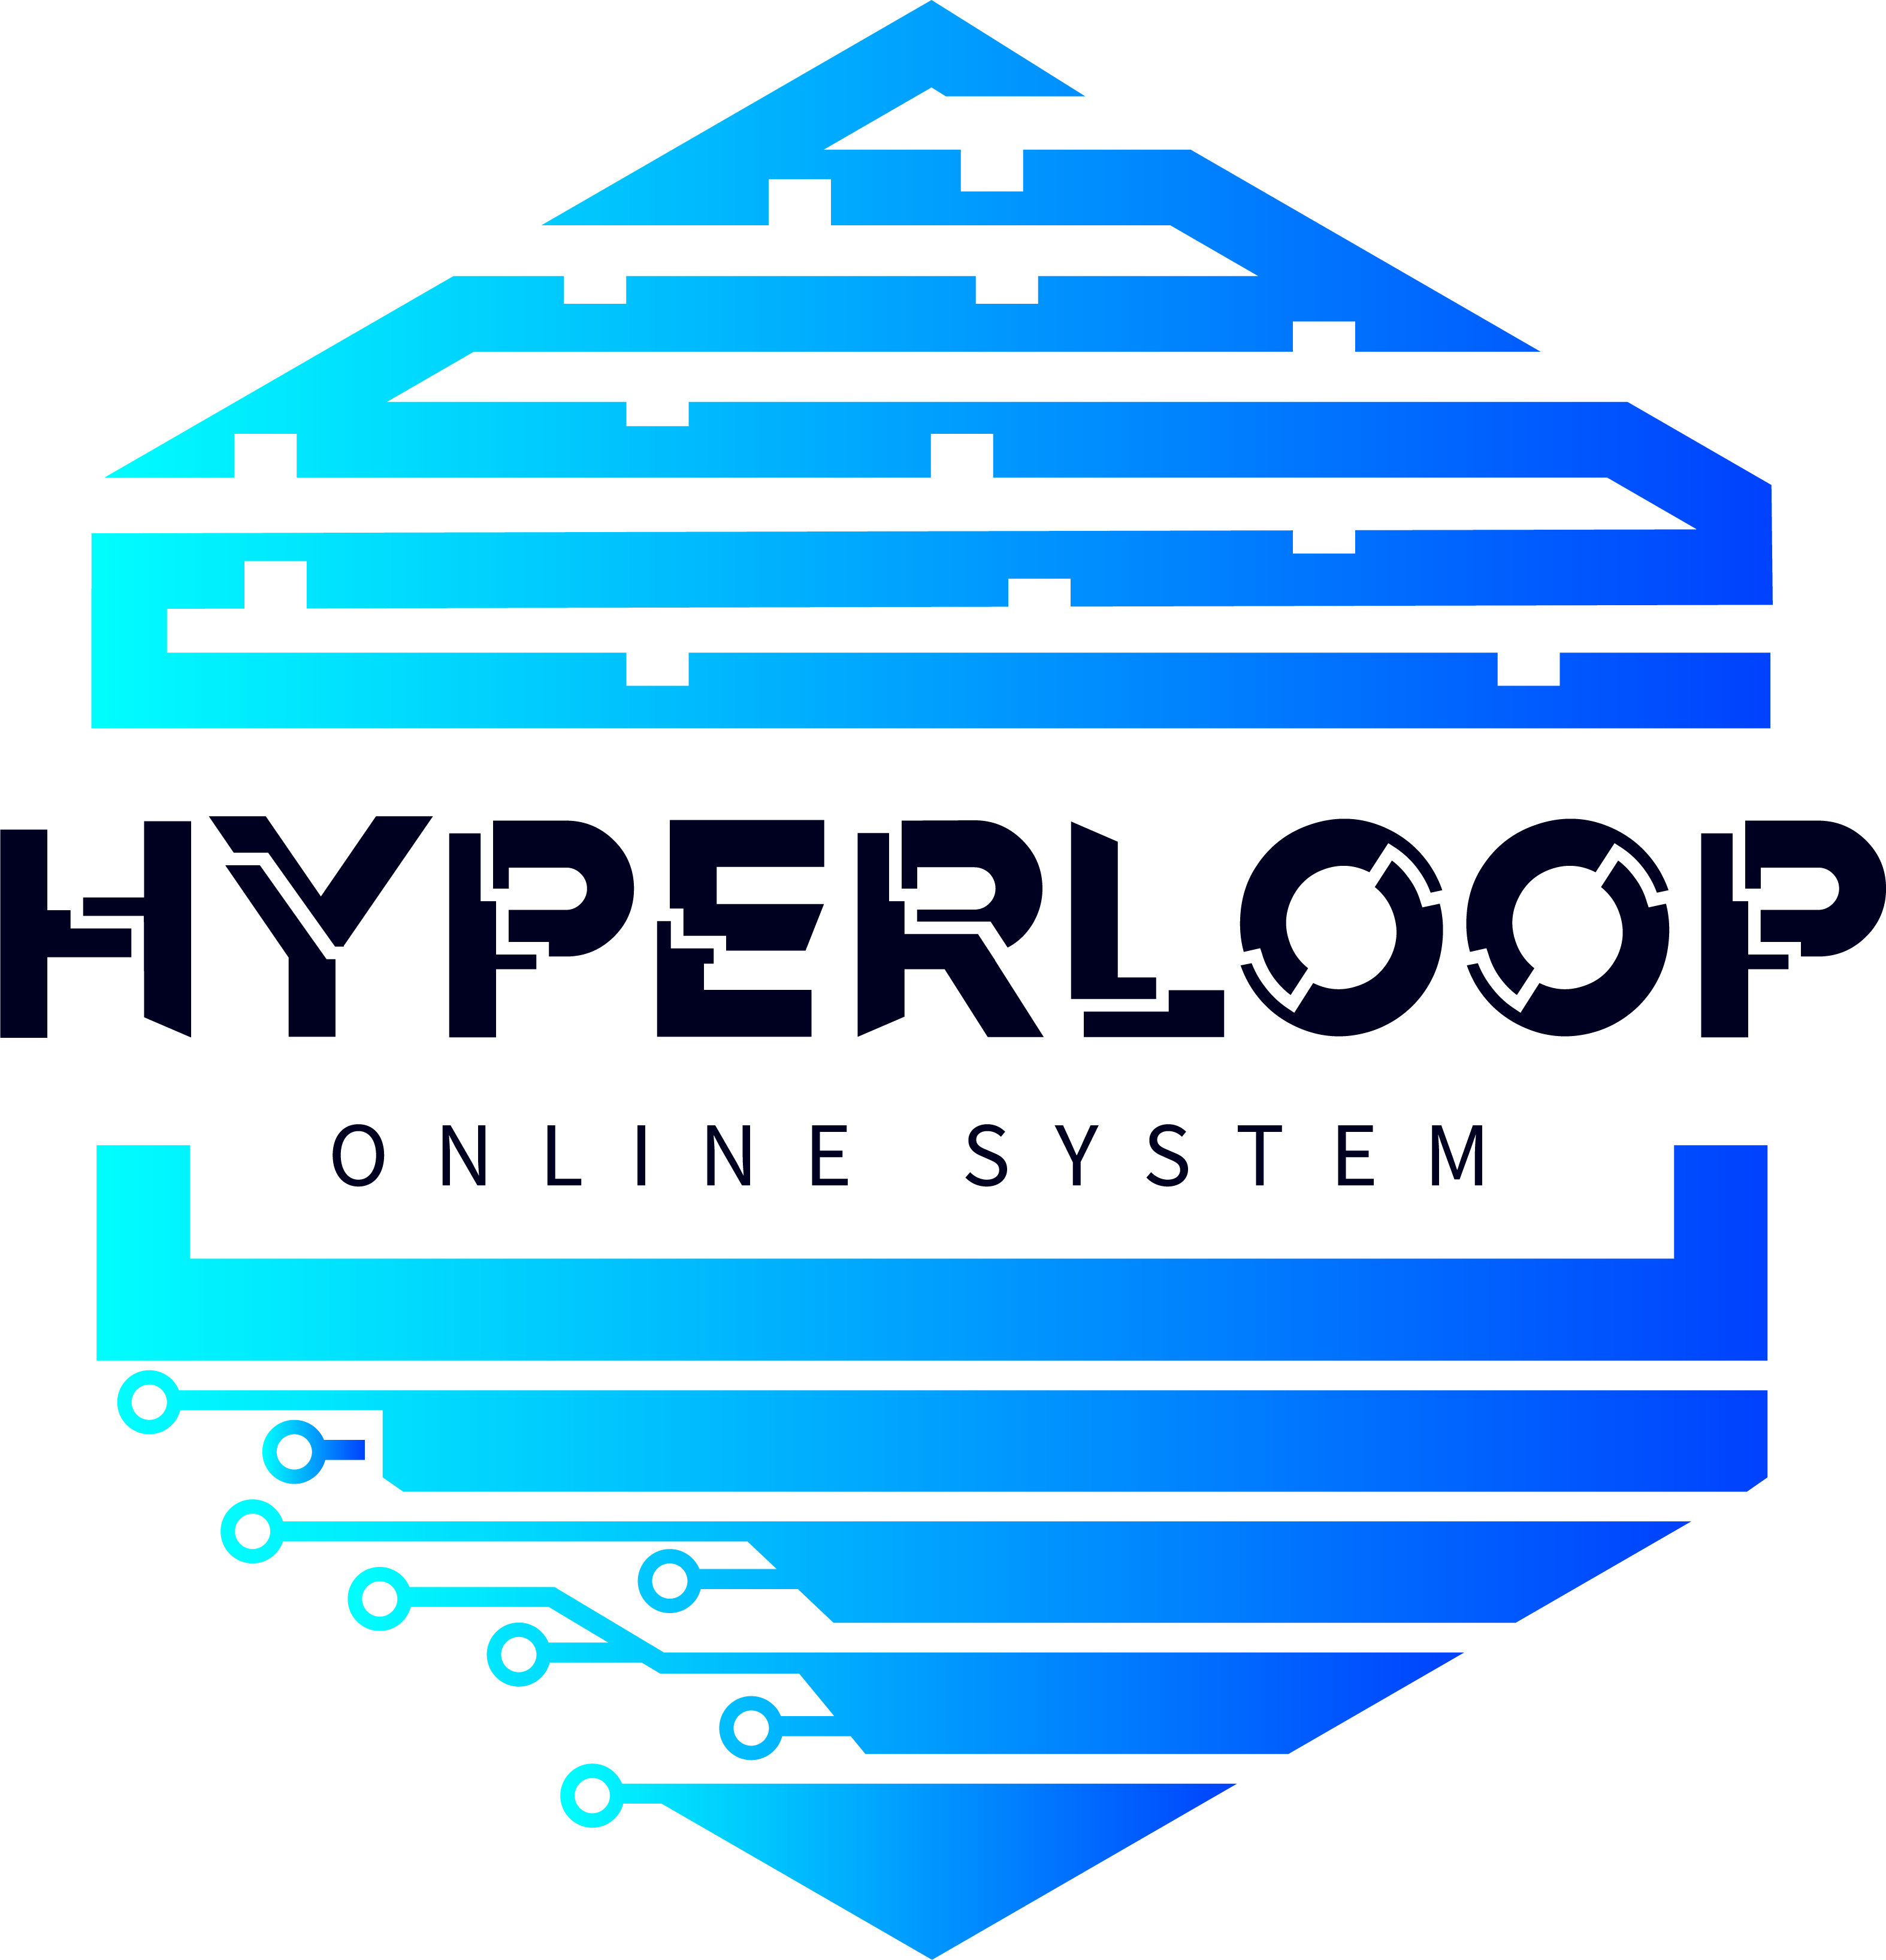 Hyperloop Online System